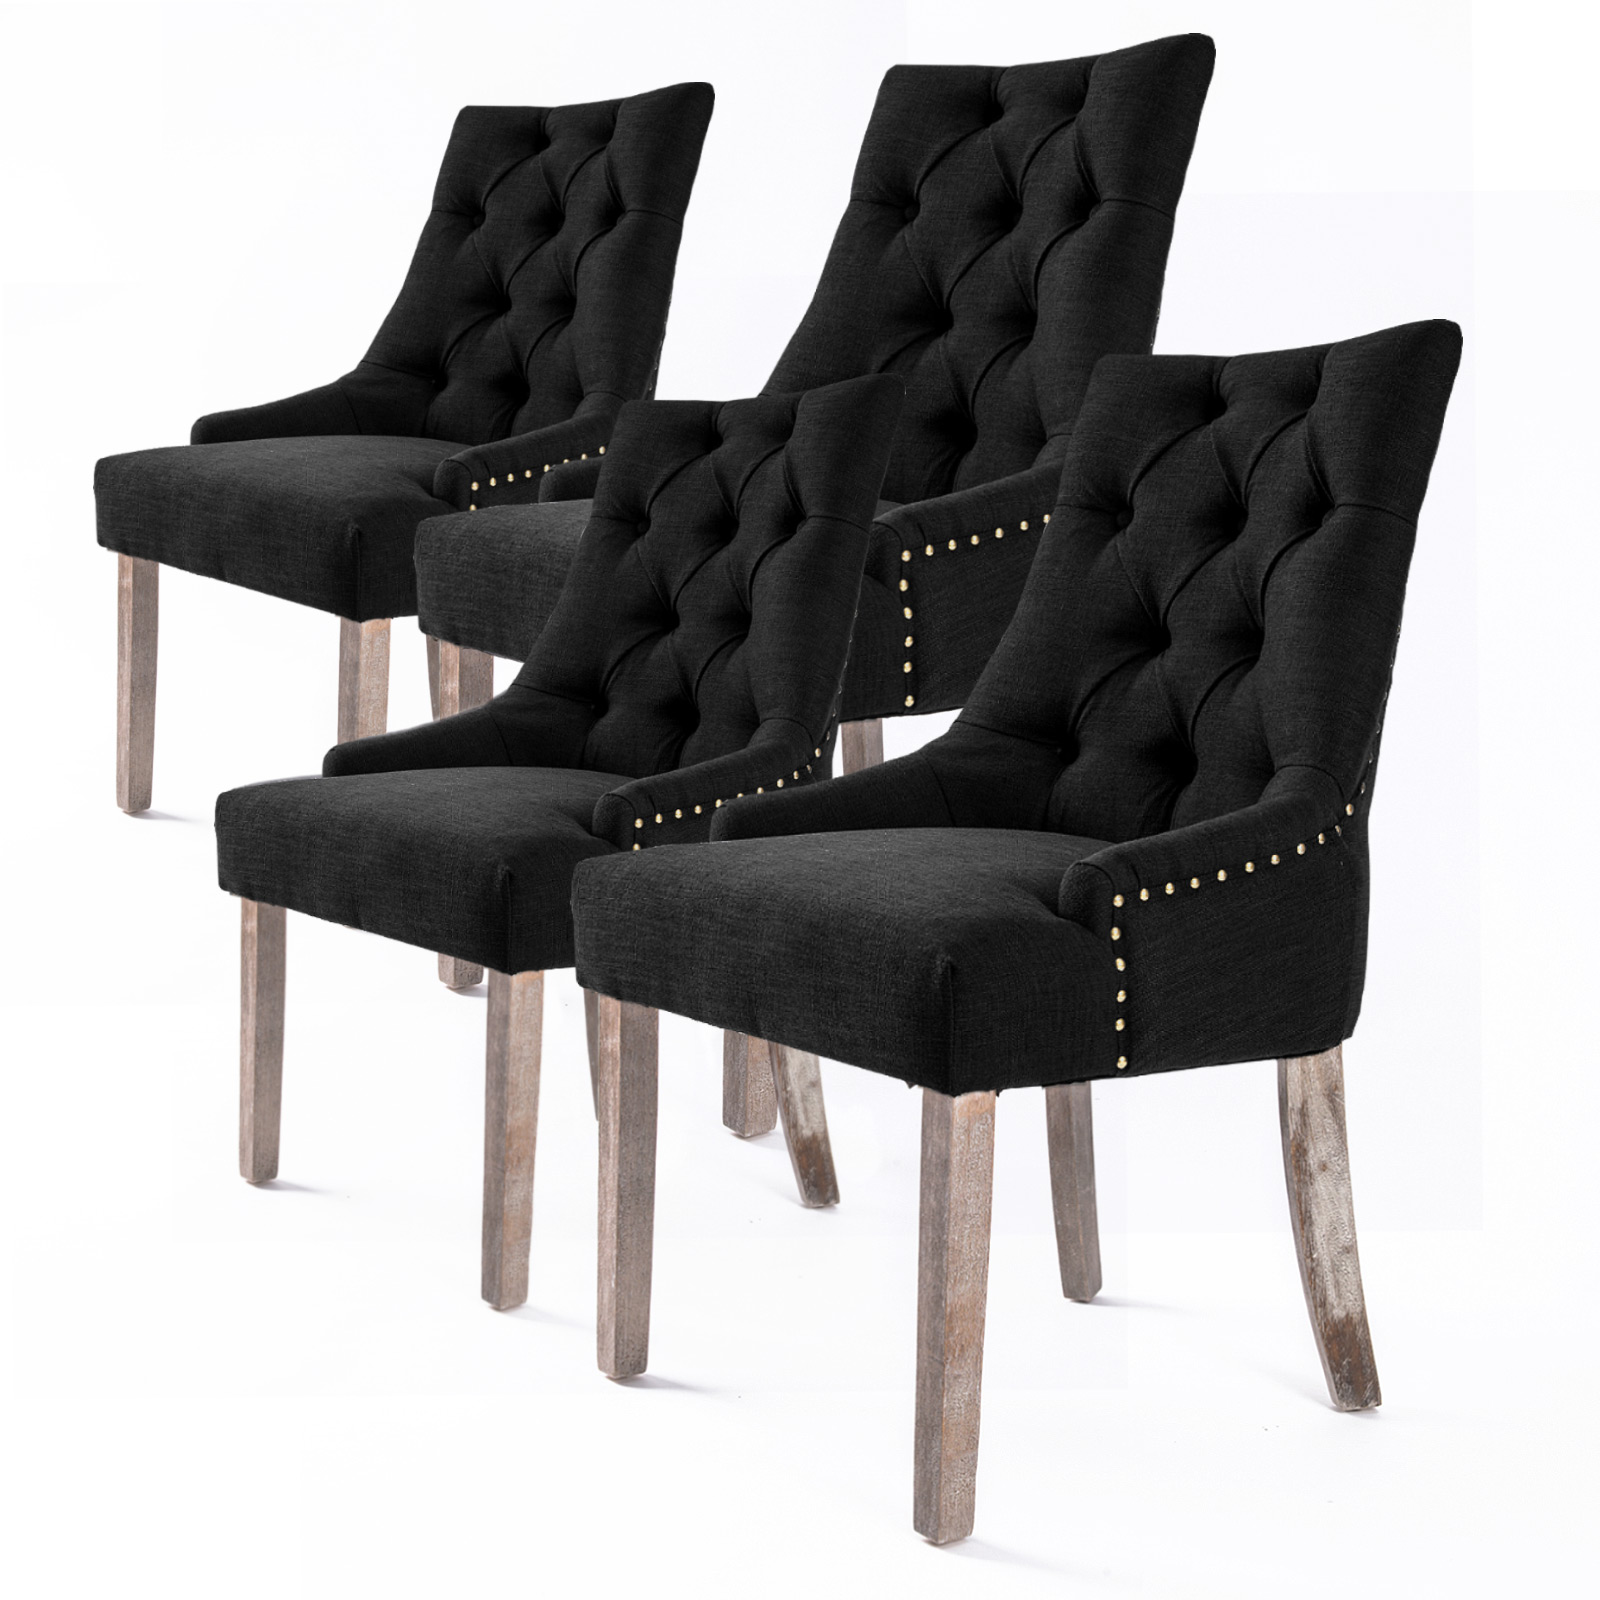 4X French Provincial Oak Leg Chair AMOUR - DARK BLACK